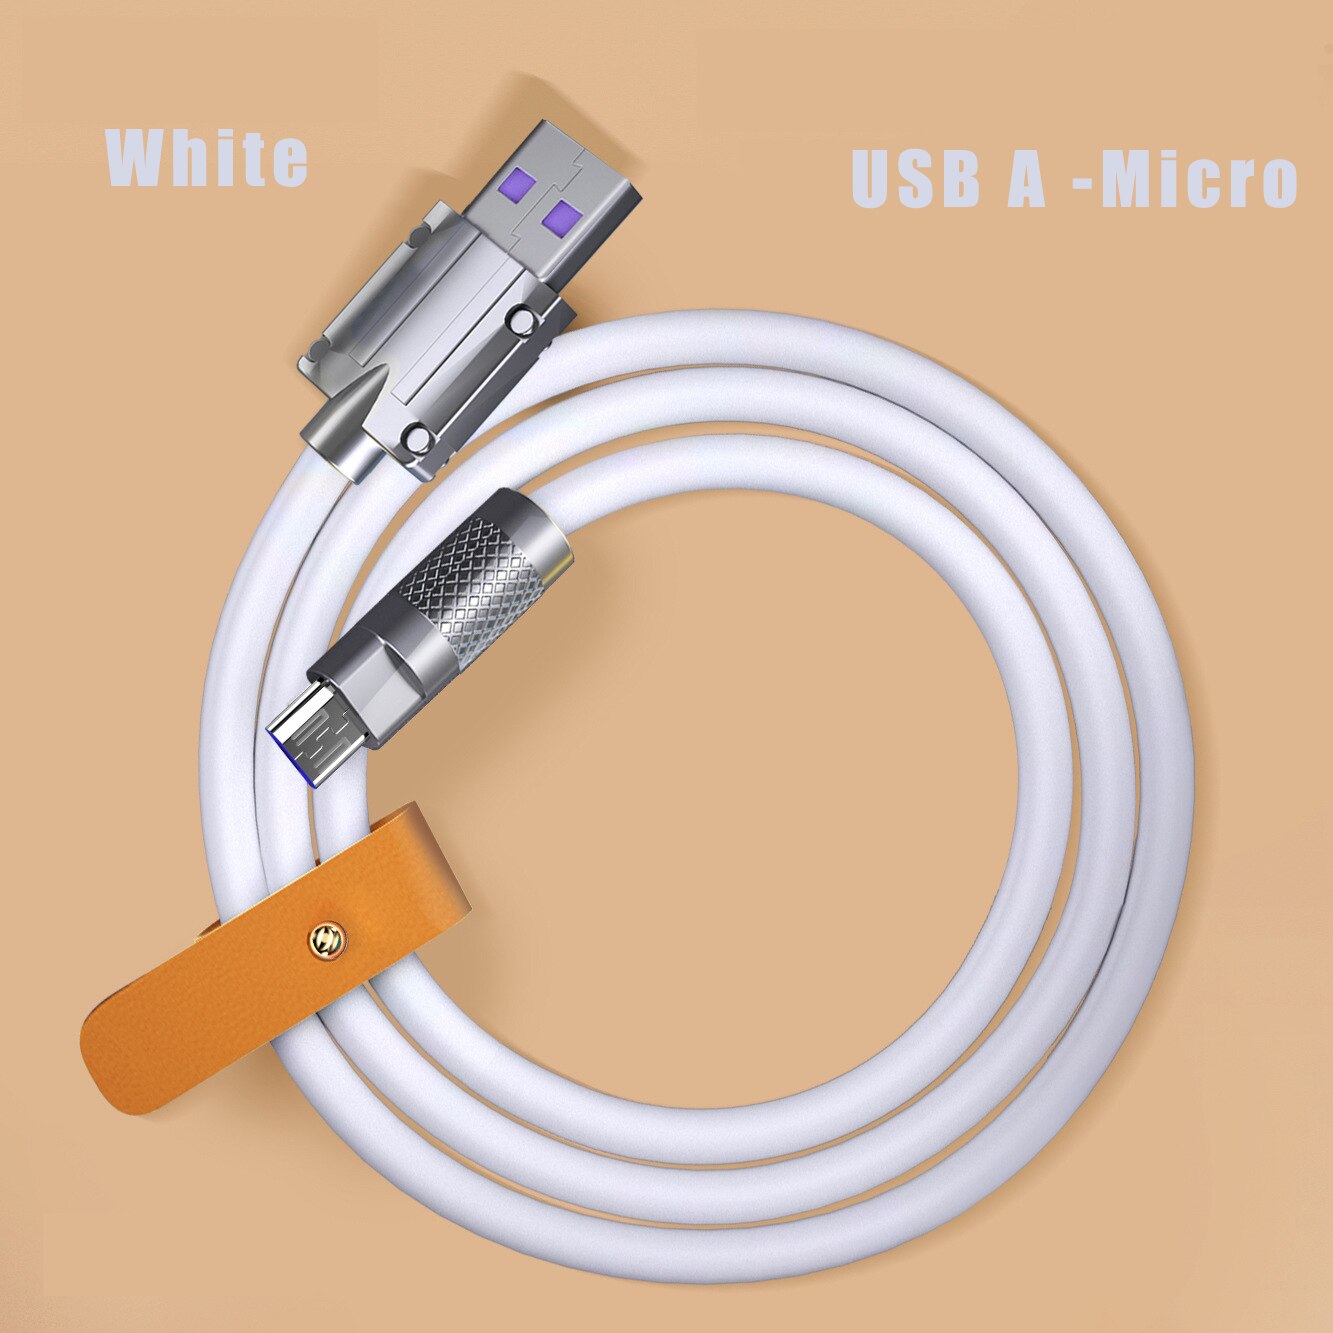 white USB A - Micro